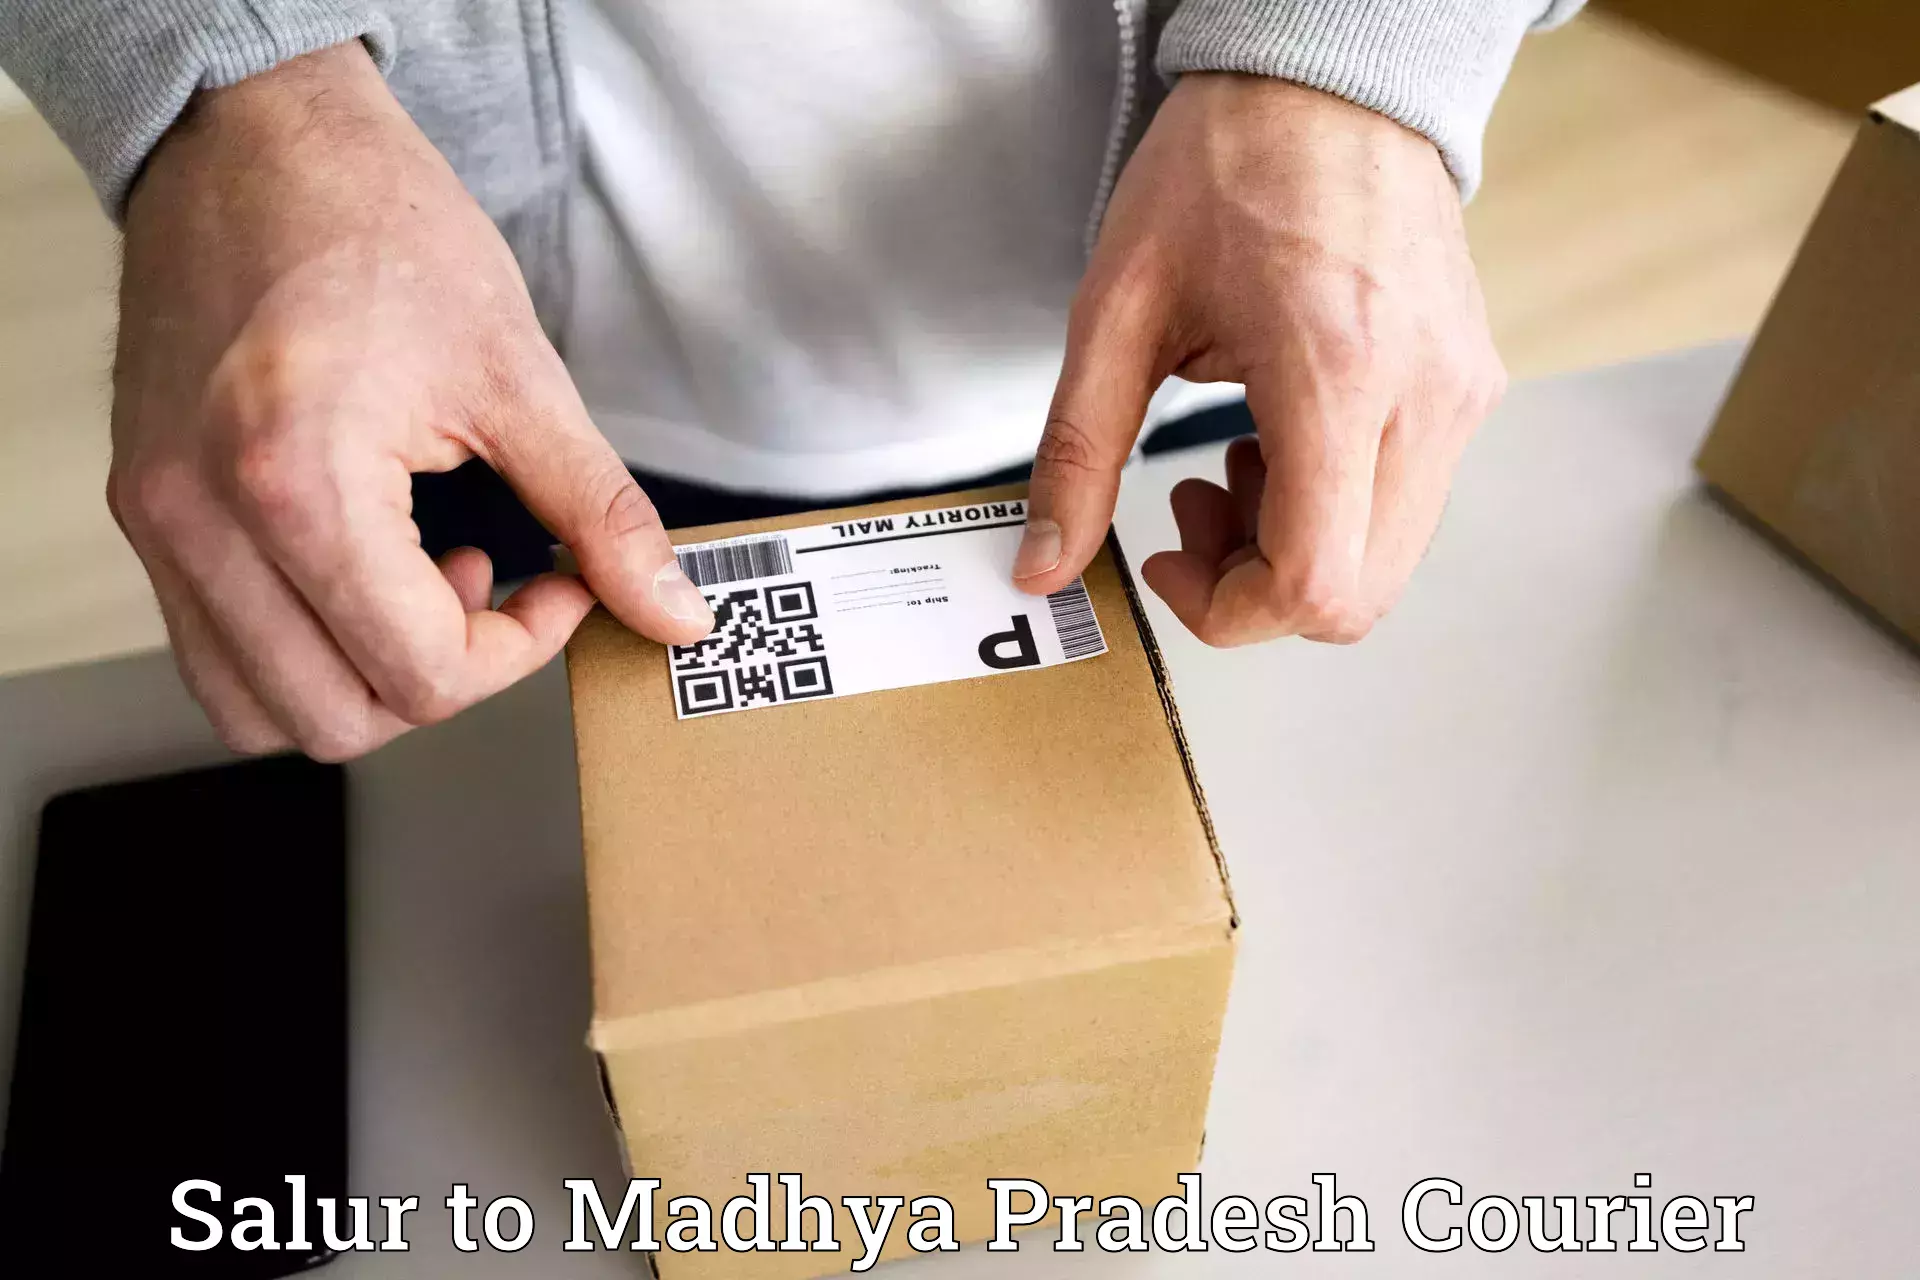 Lightweight parcel options Salur to Silwani